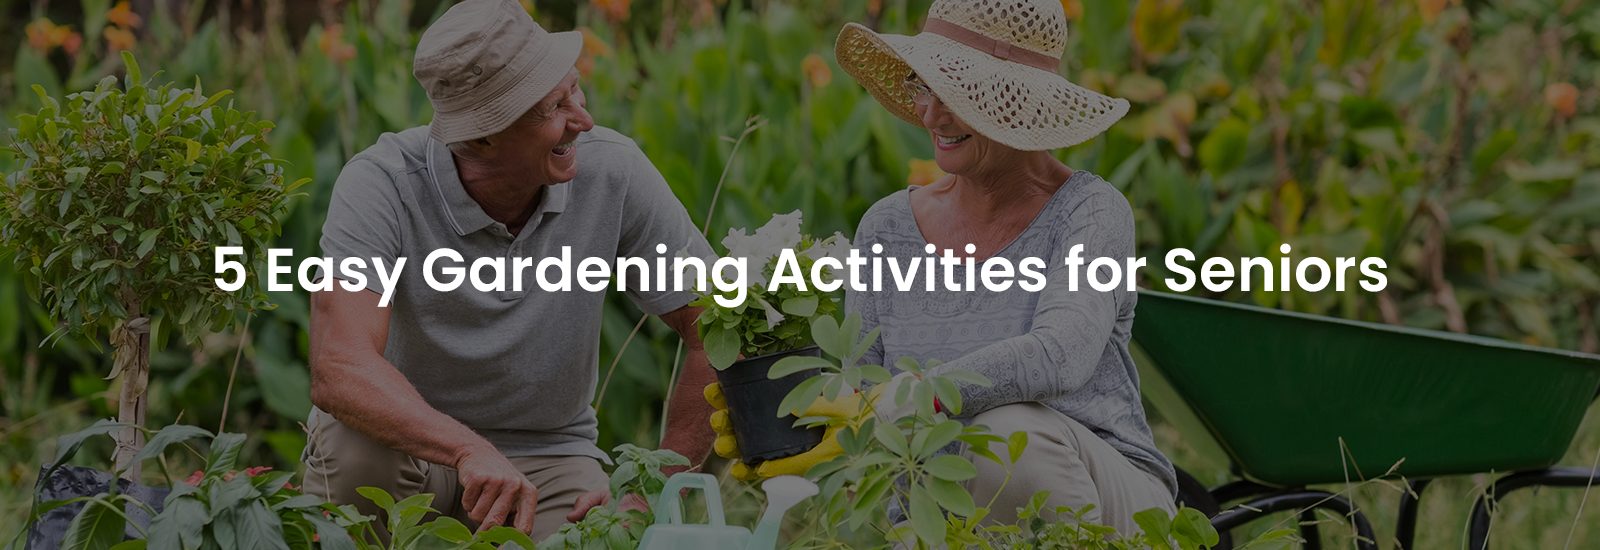 5 Easy Gardening Activities for Seniors | Banner Image